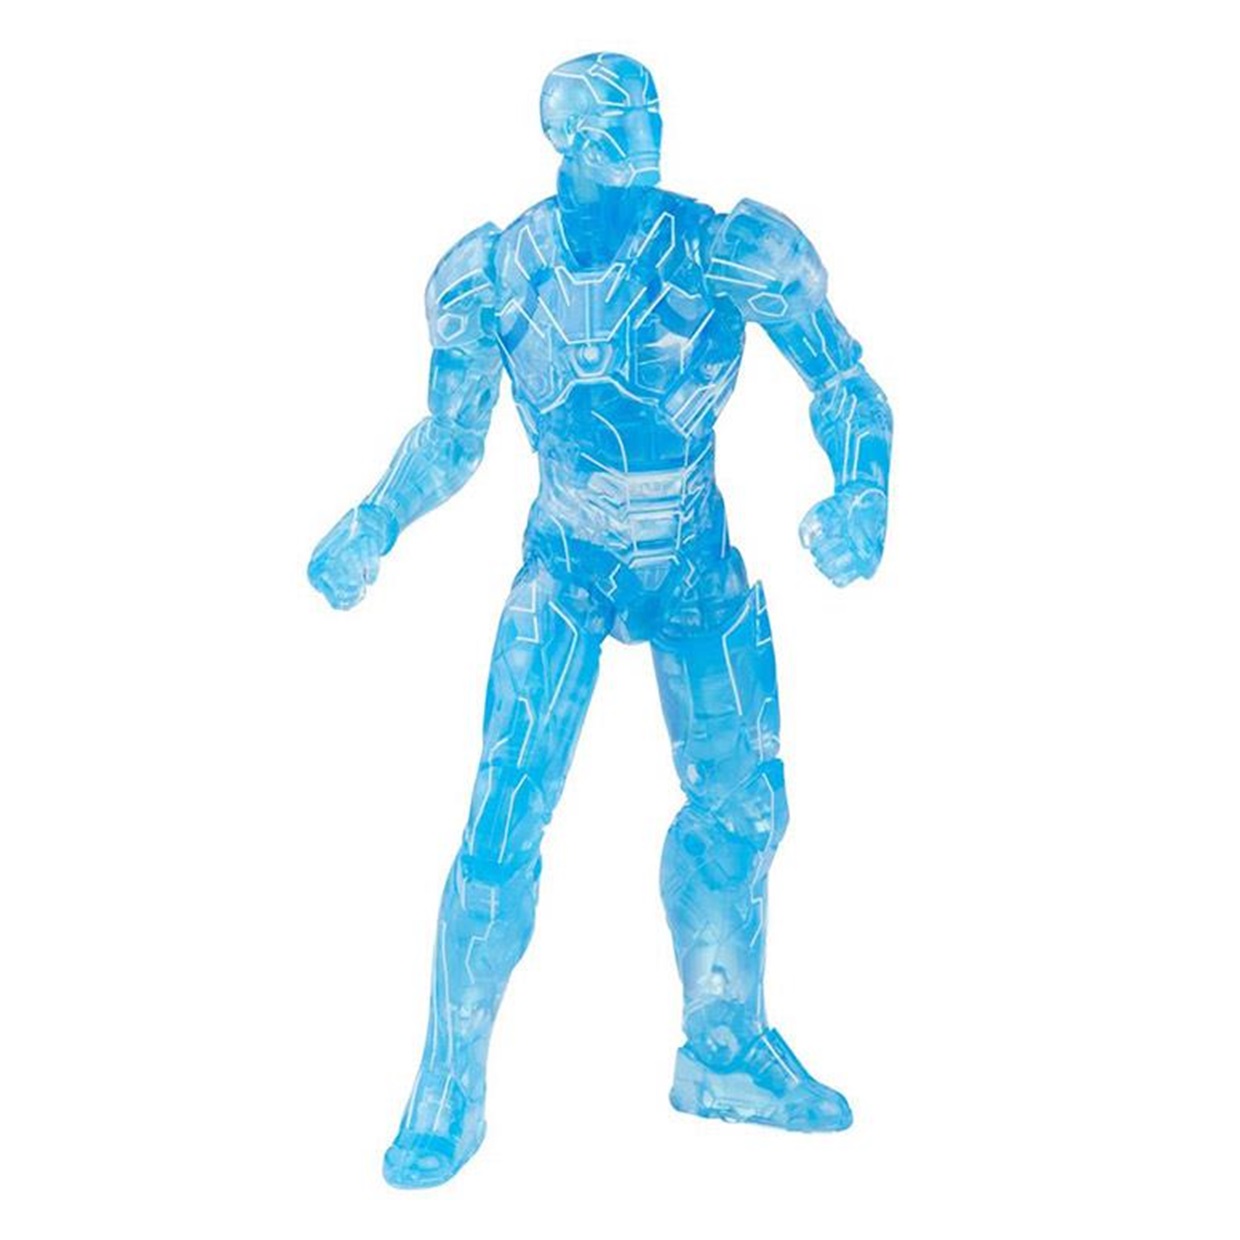 Hologram Iron Man Figura Marvel B A F Ursa Major Legends